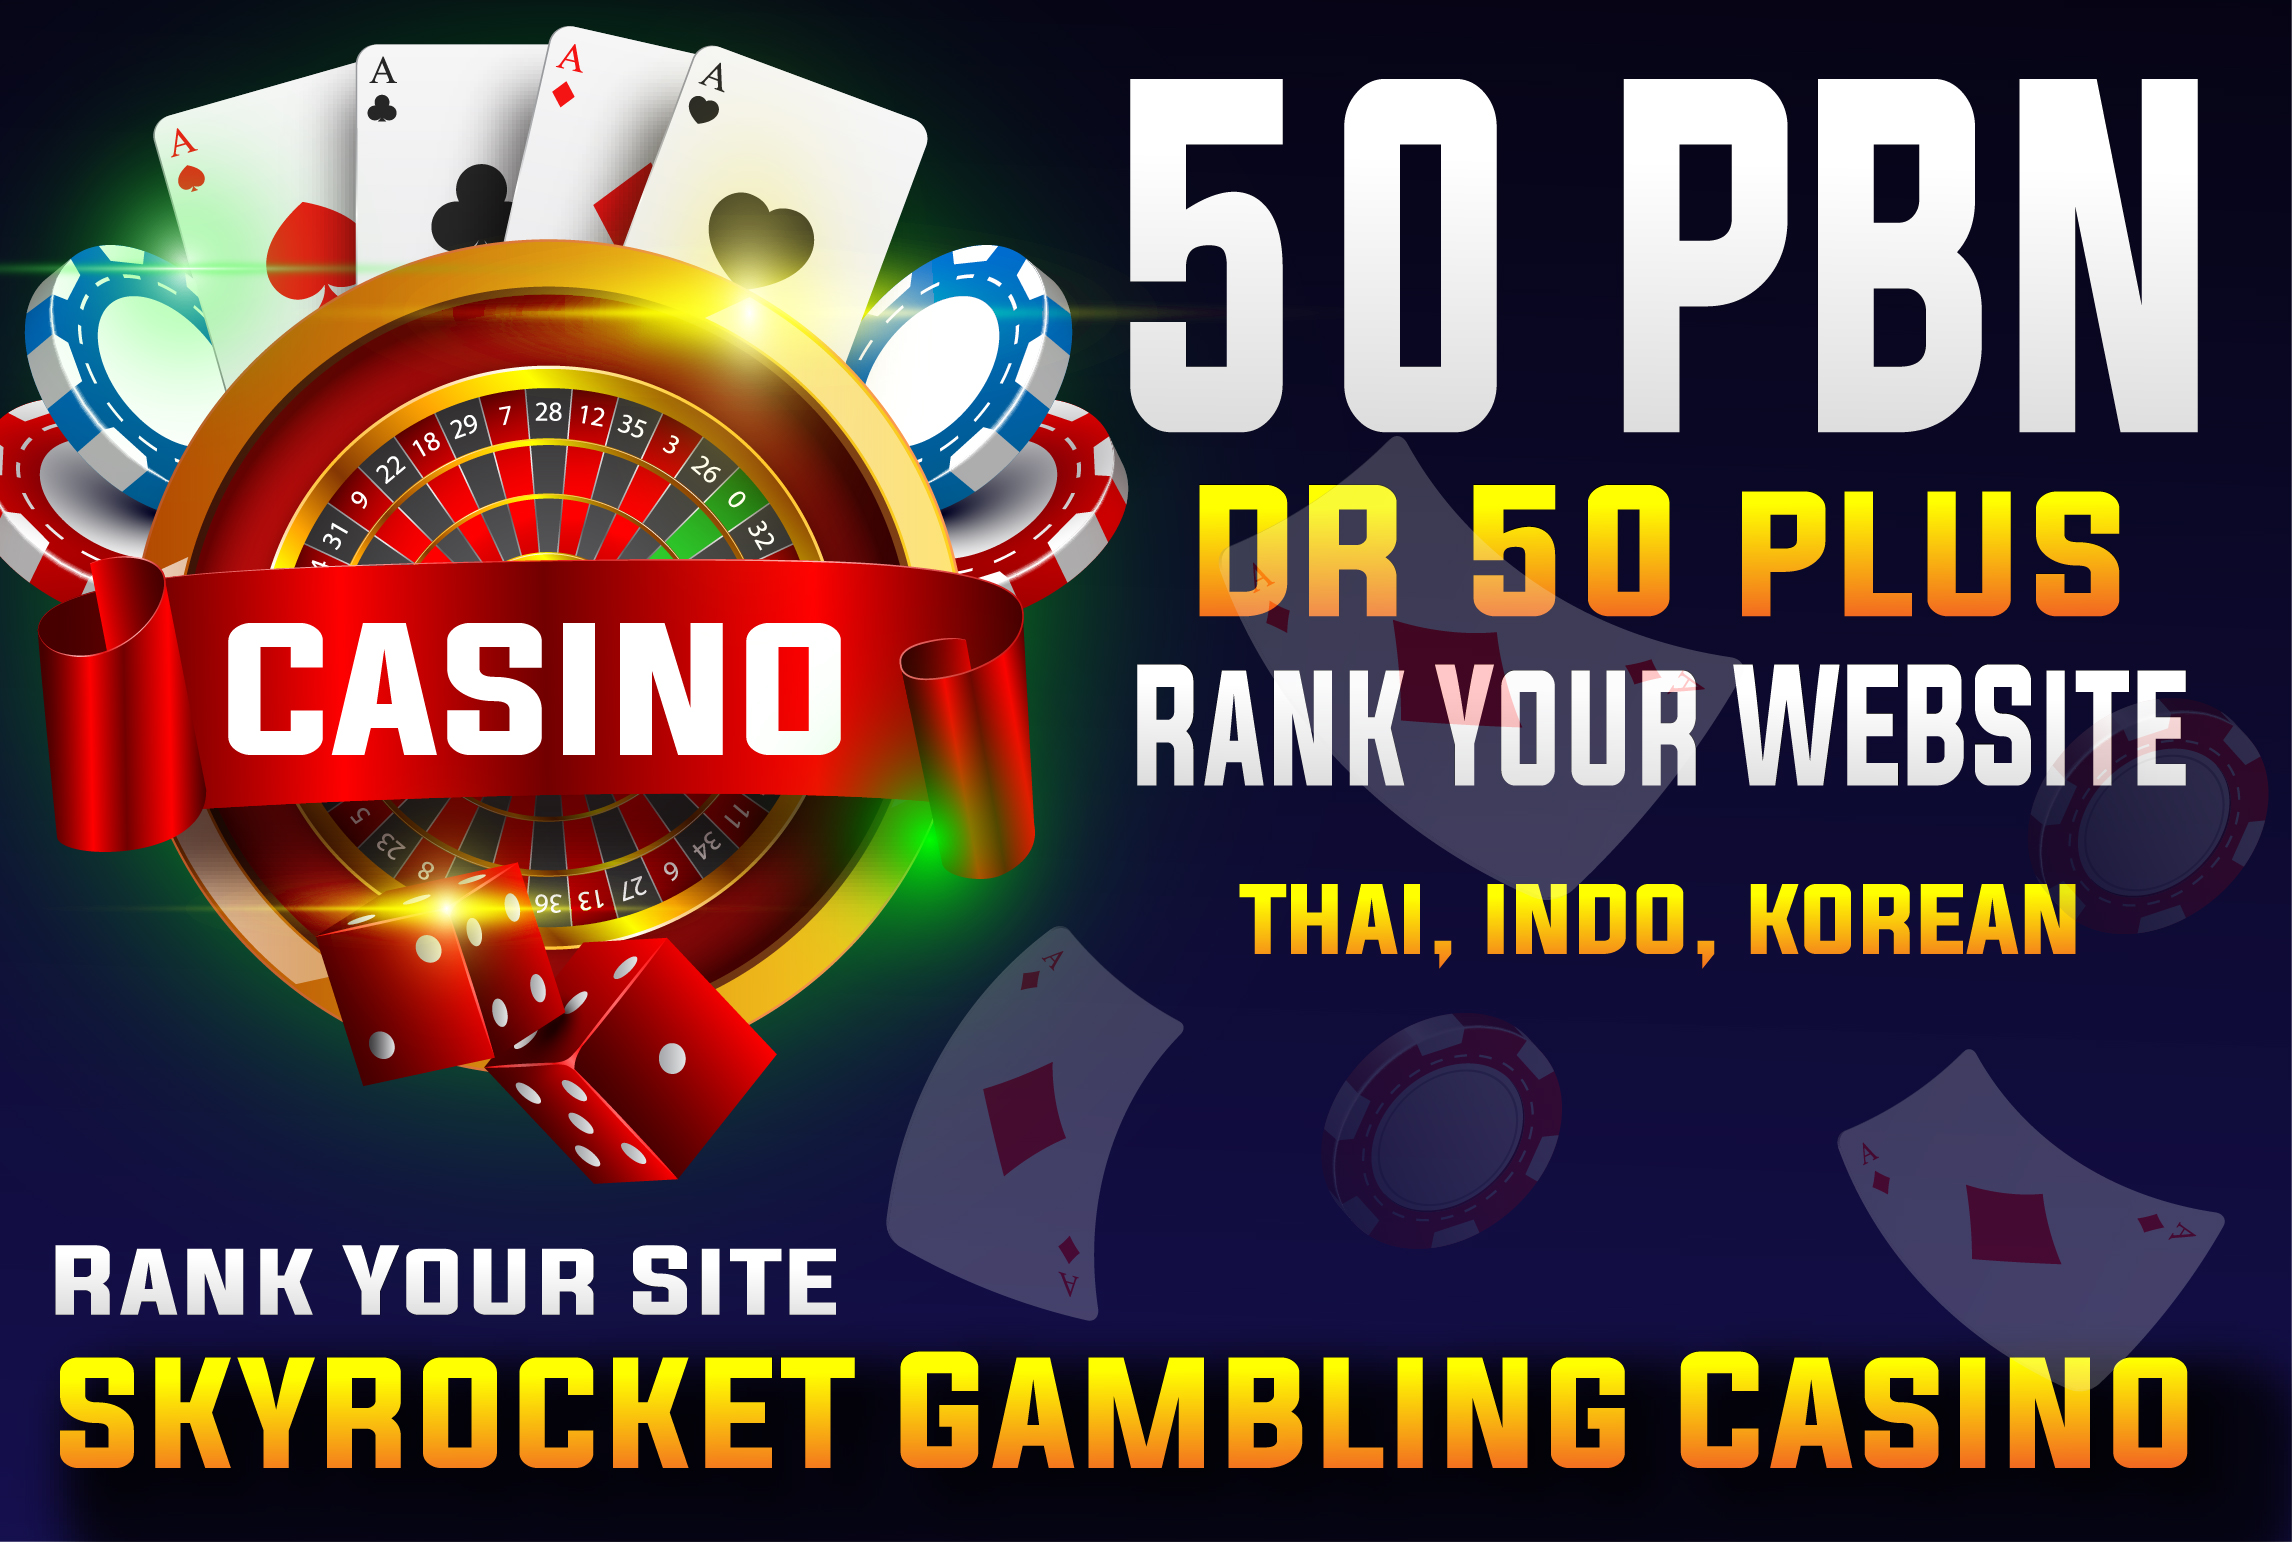 Skyrocket Gambling Casino 50 PBN DR50+ Thai, Indo, Korean